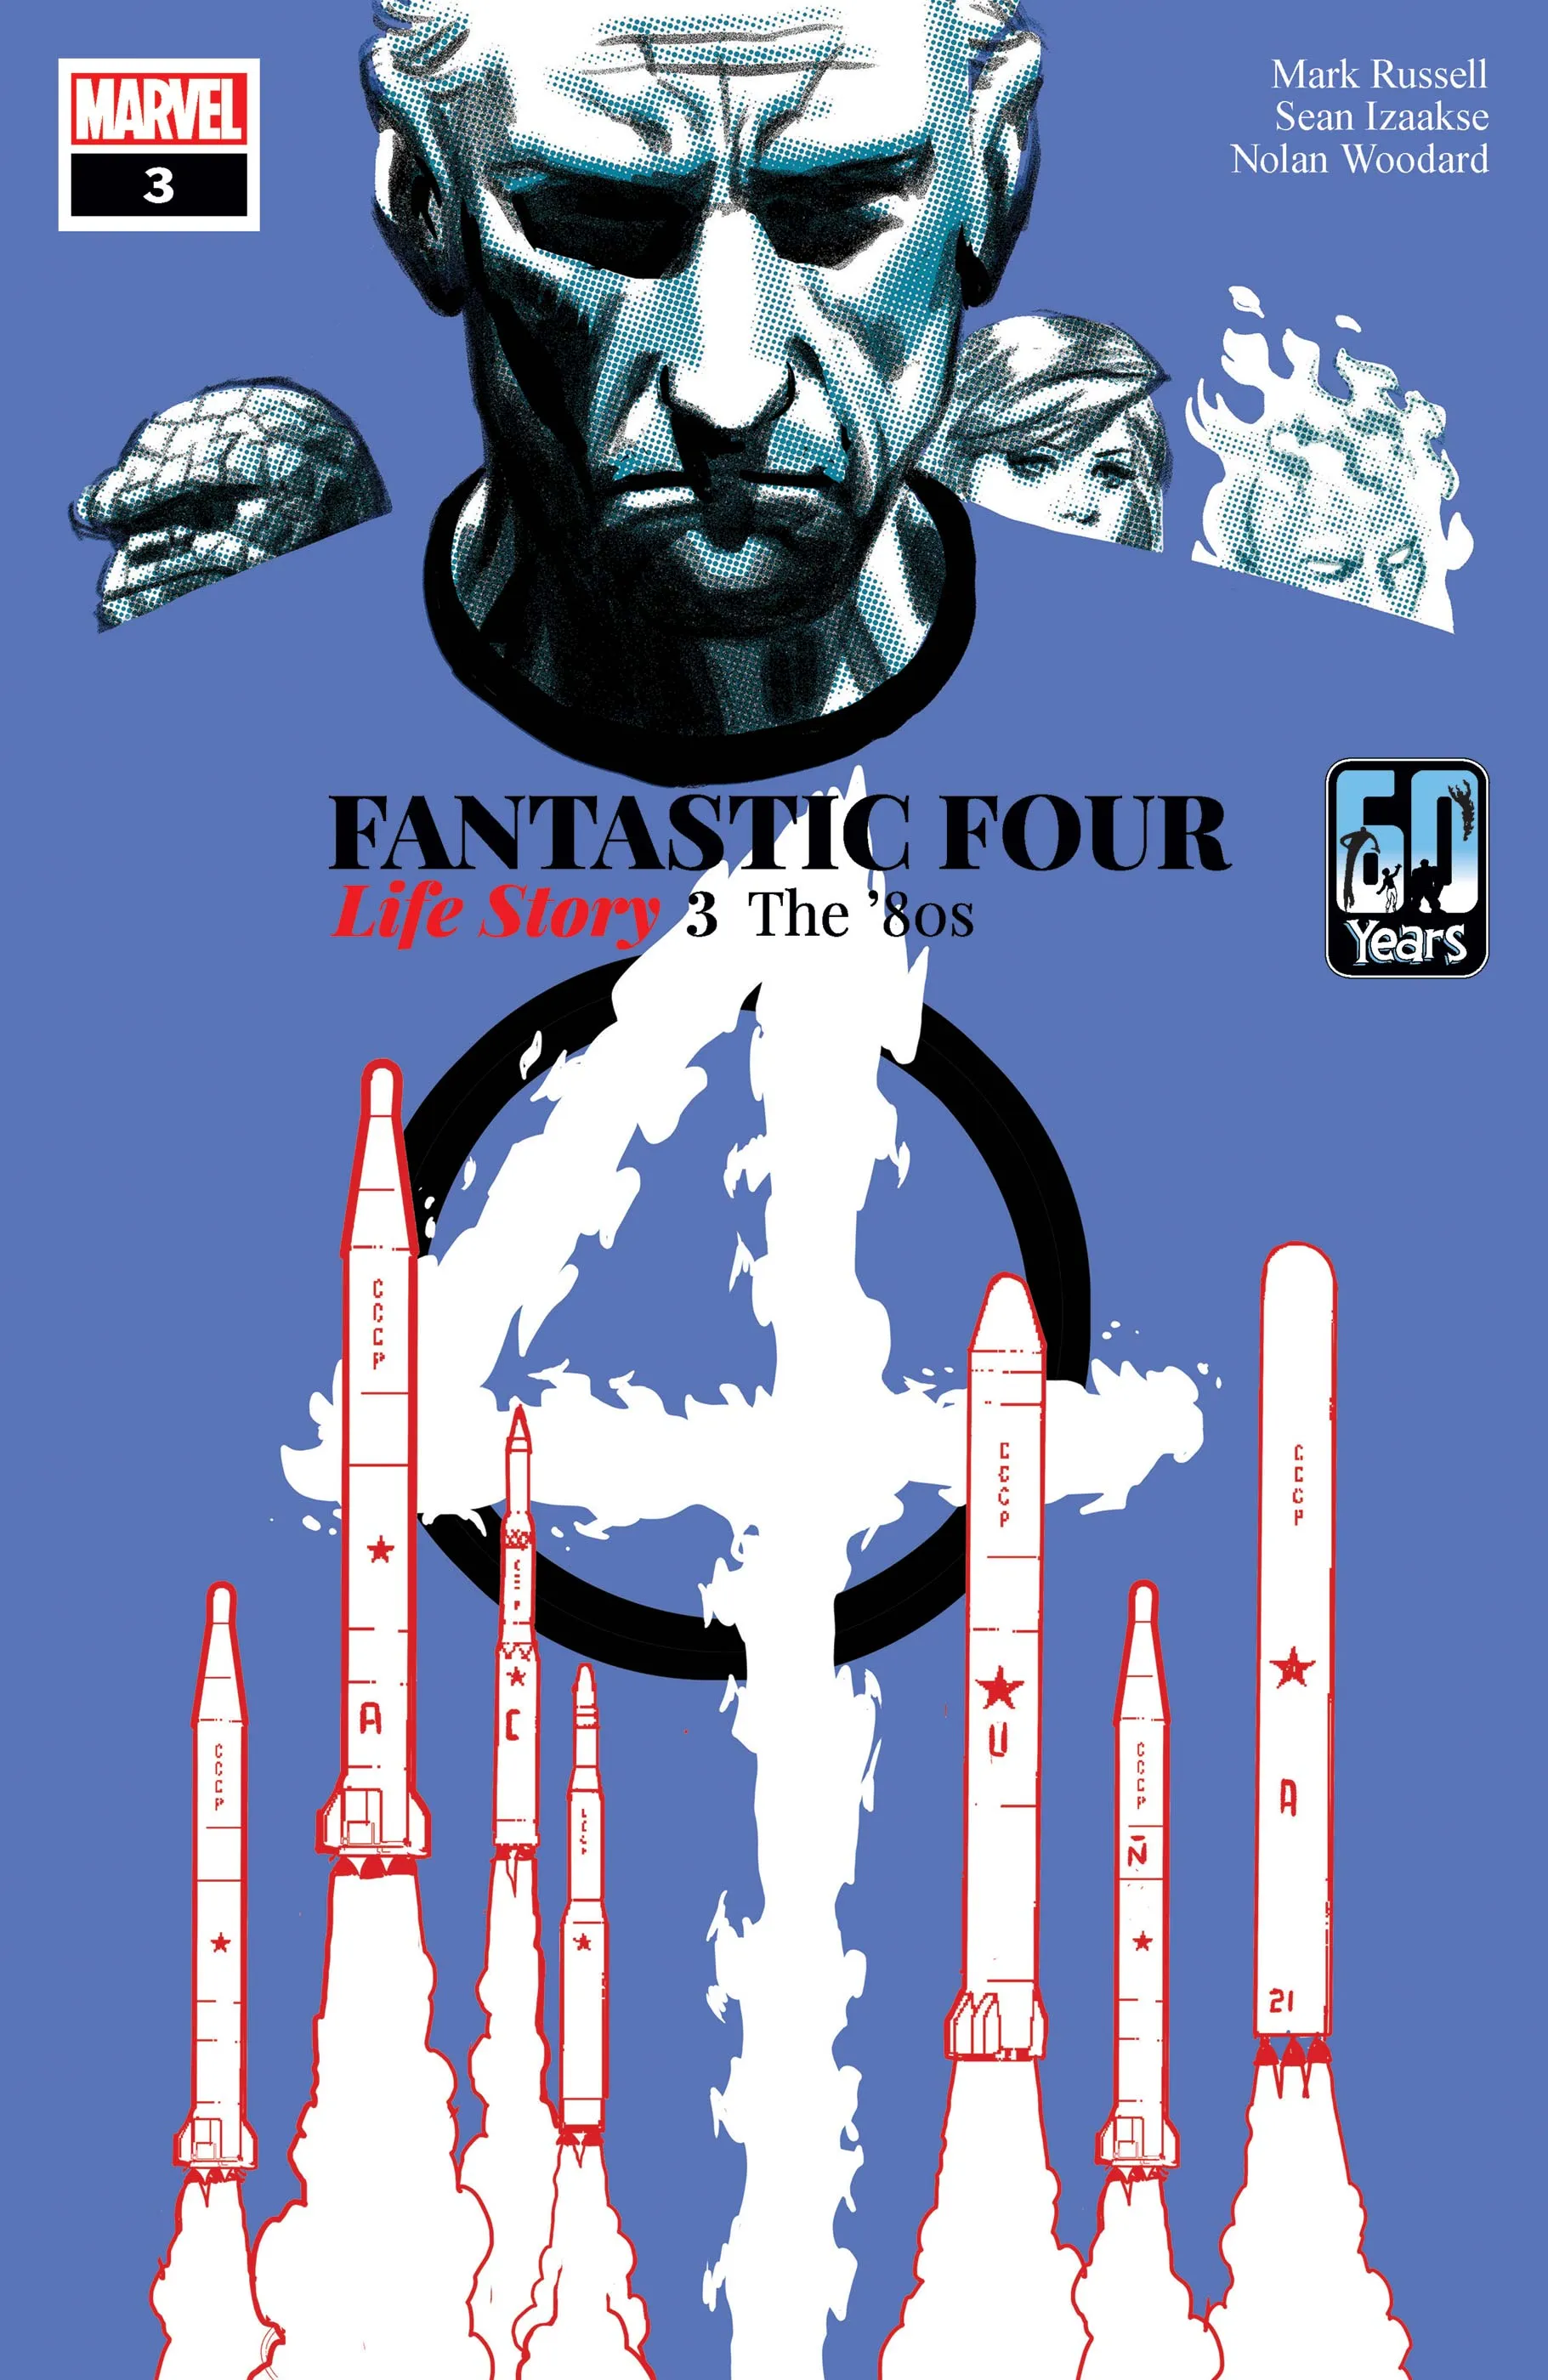 cover of 'Fantastic Four: Life Story' no 3